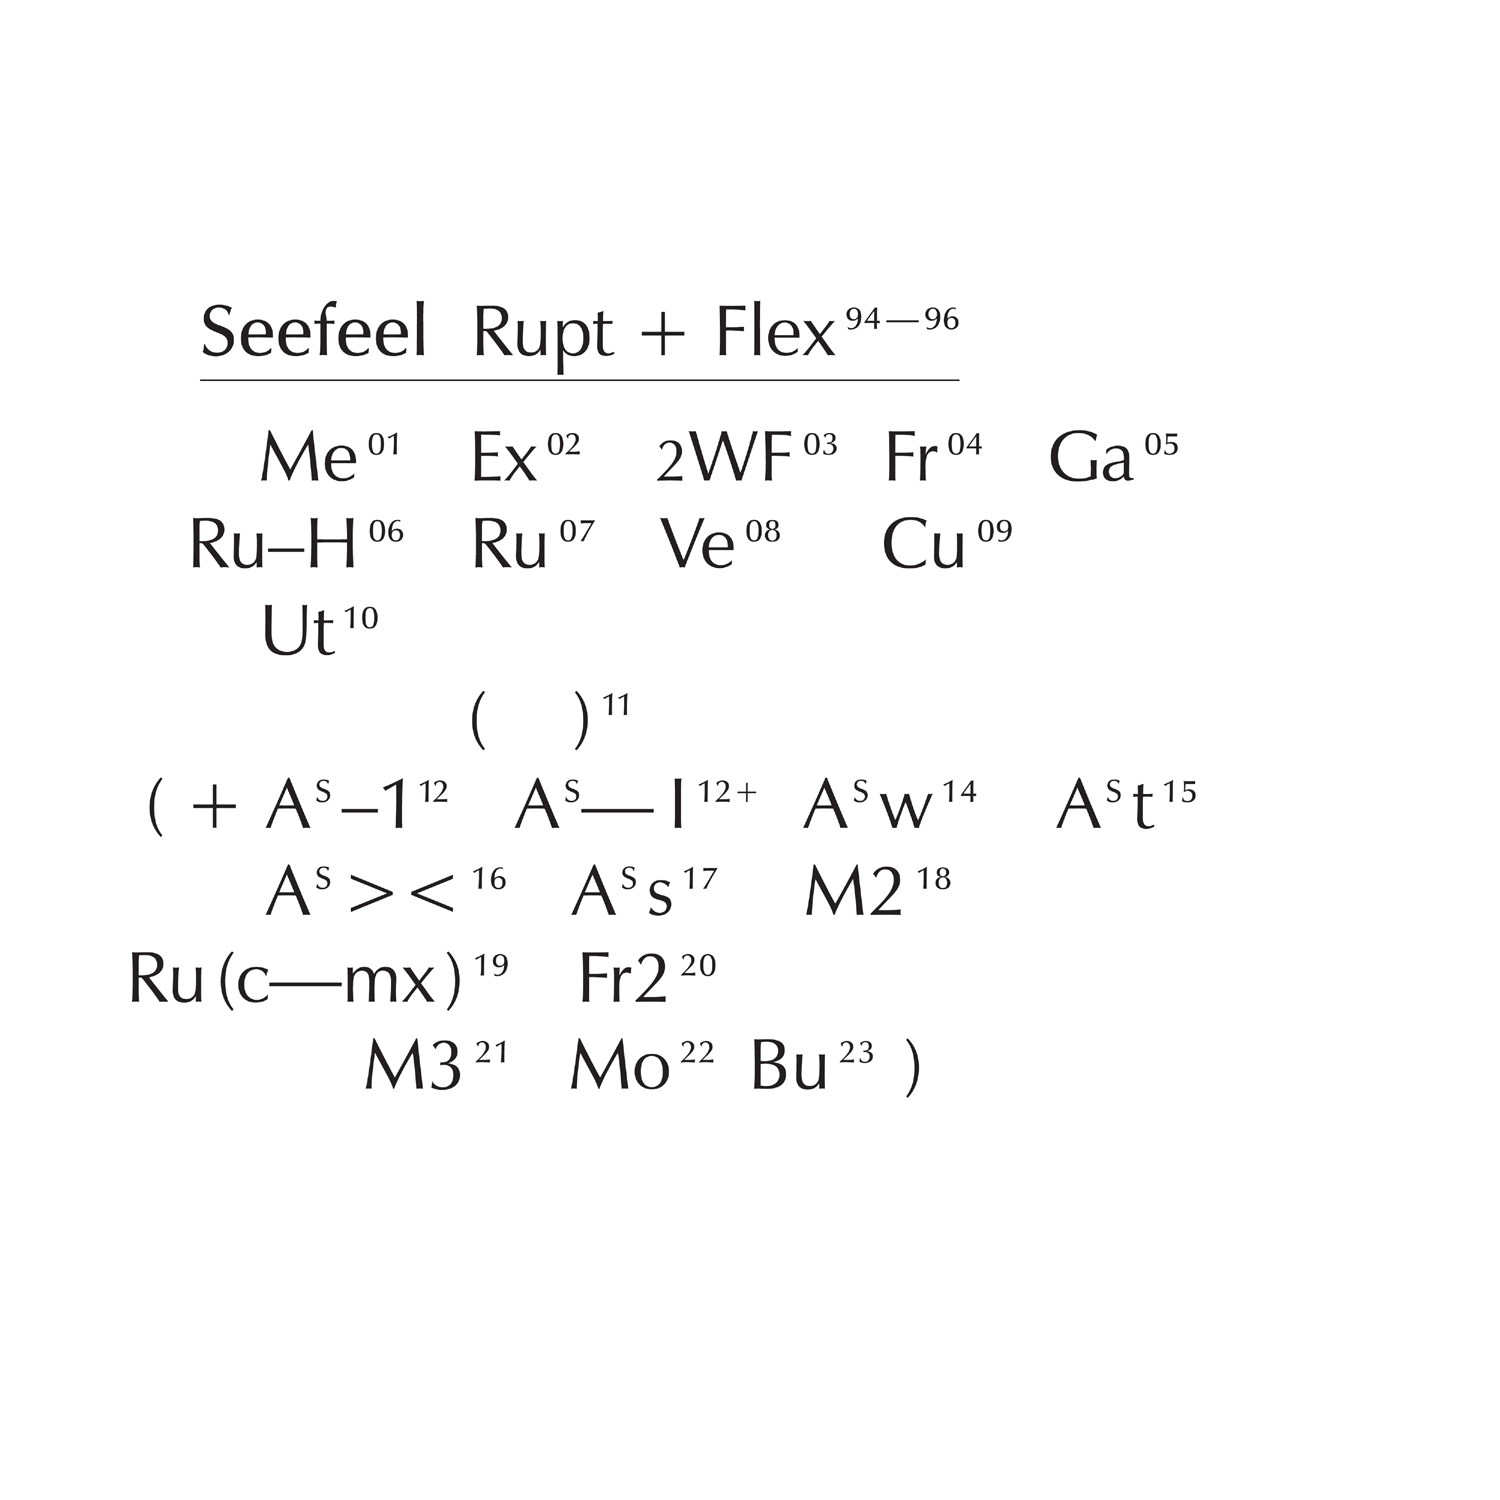 SEEFEEL 'Rupt & Flex (1994-96)'